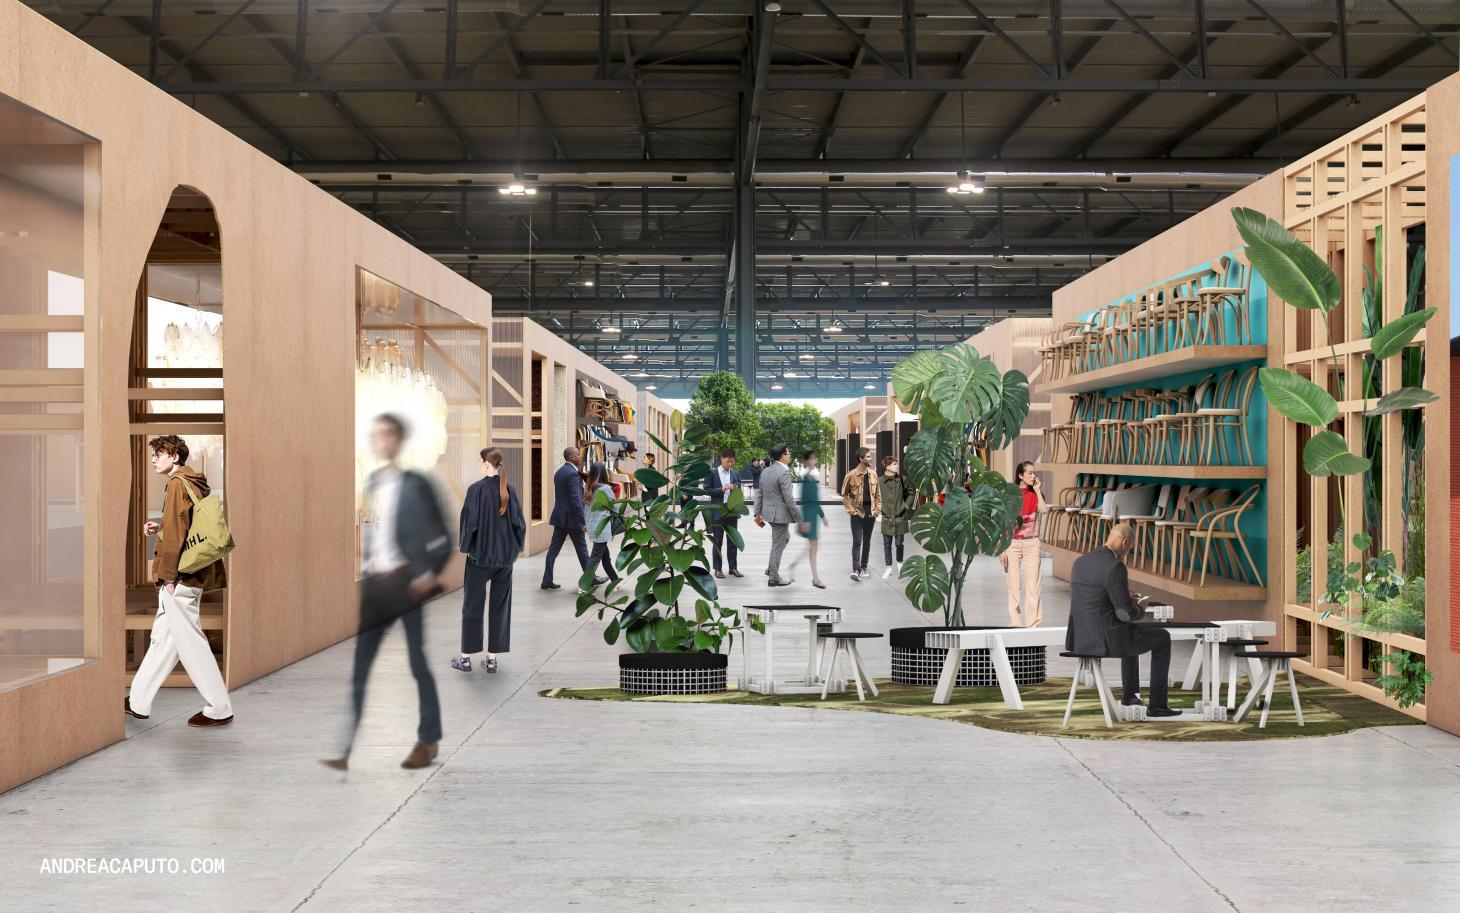 Salone del Mobile 2024 - Milan Furniture Fair